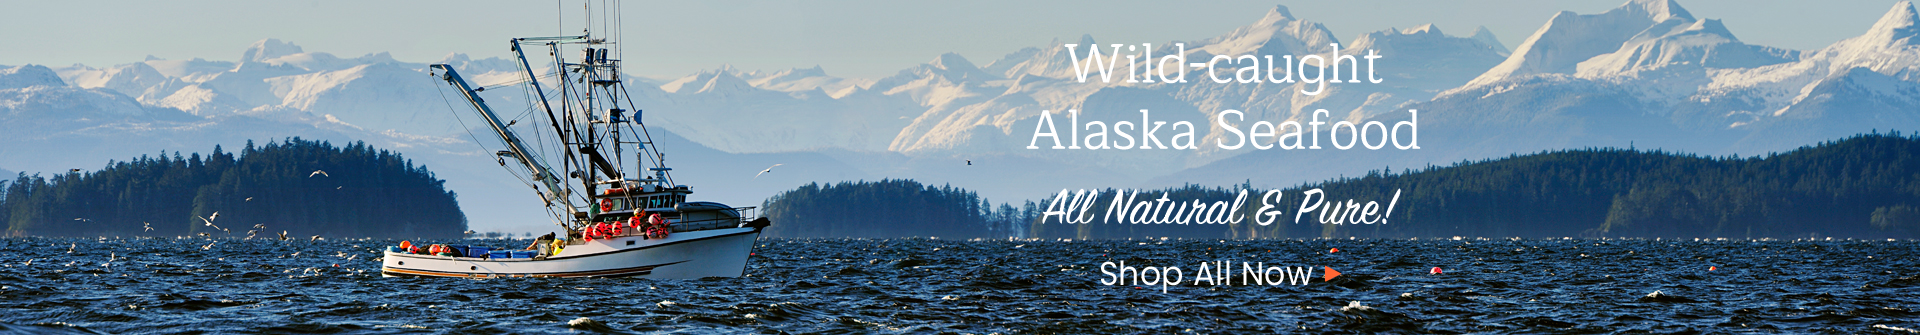 Wild-caught Alaska Seafood